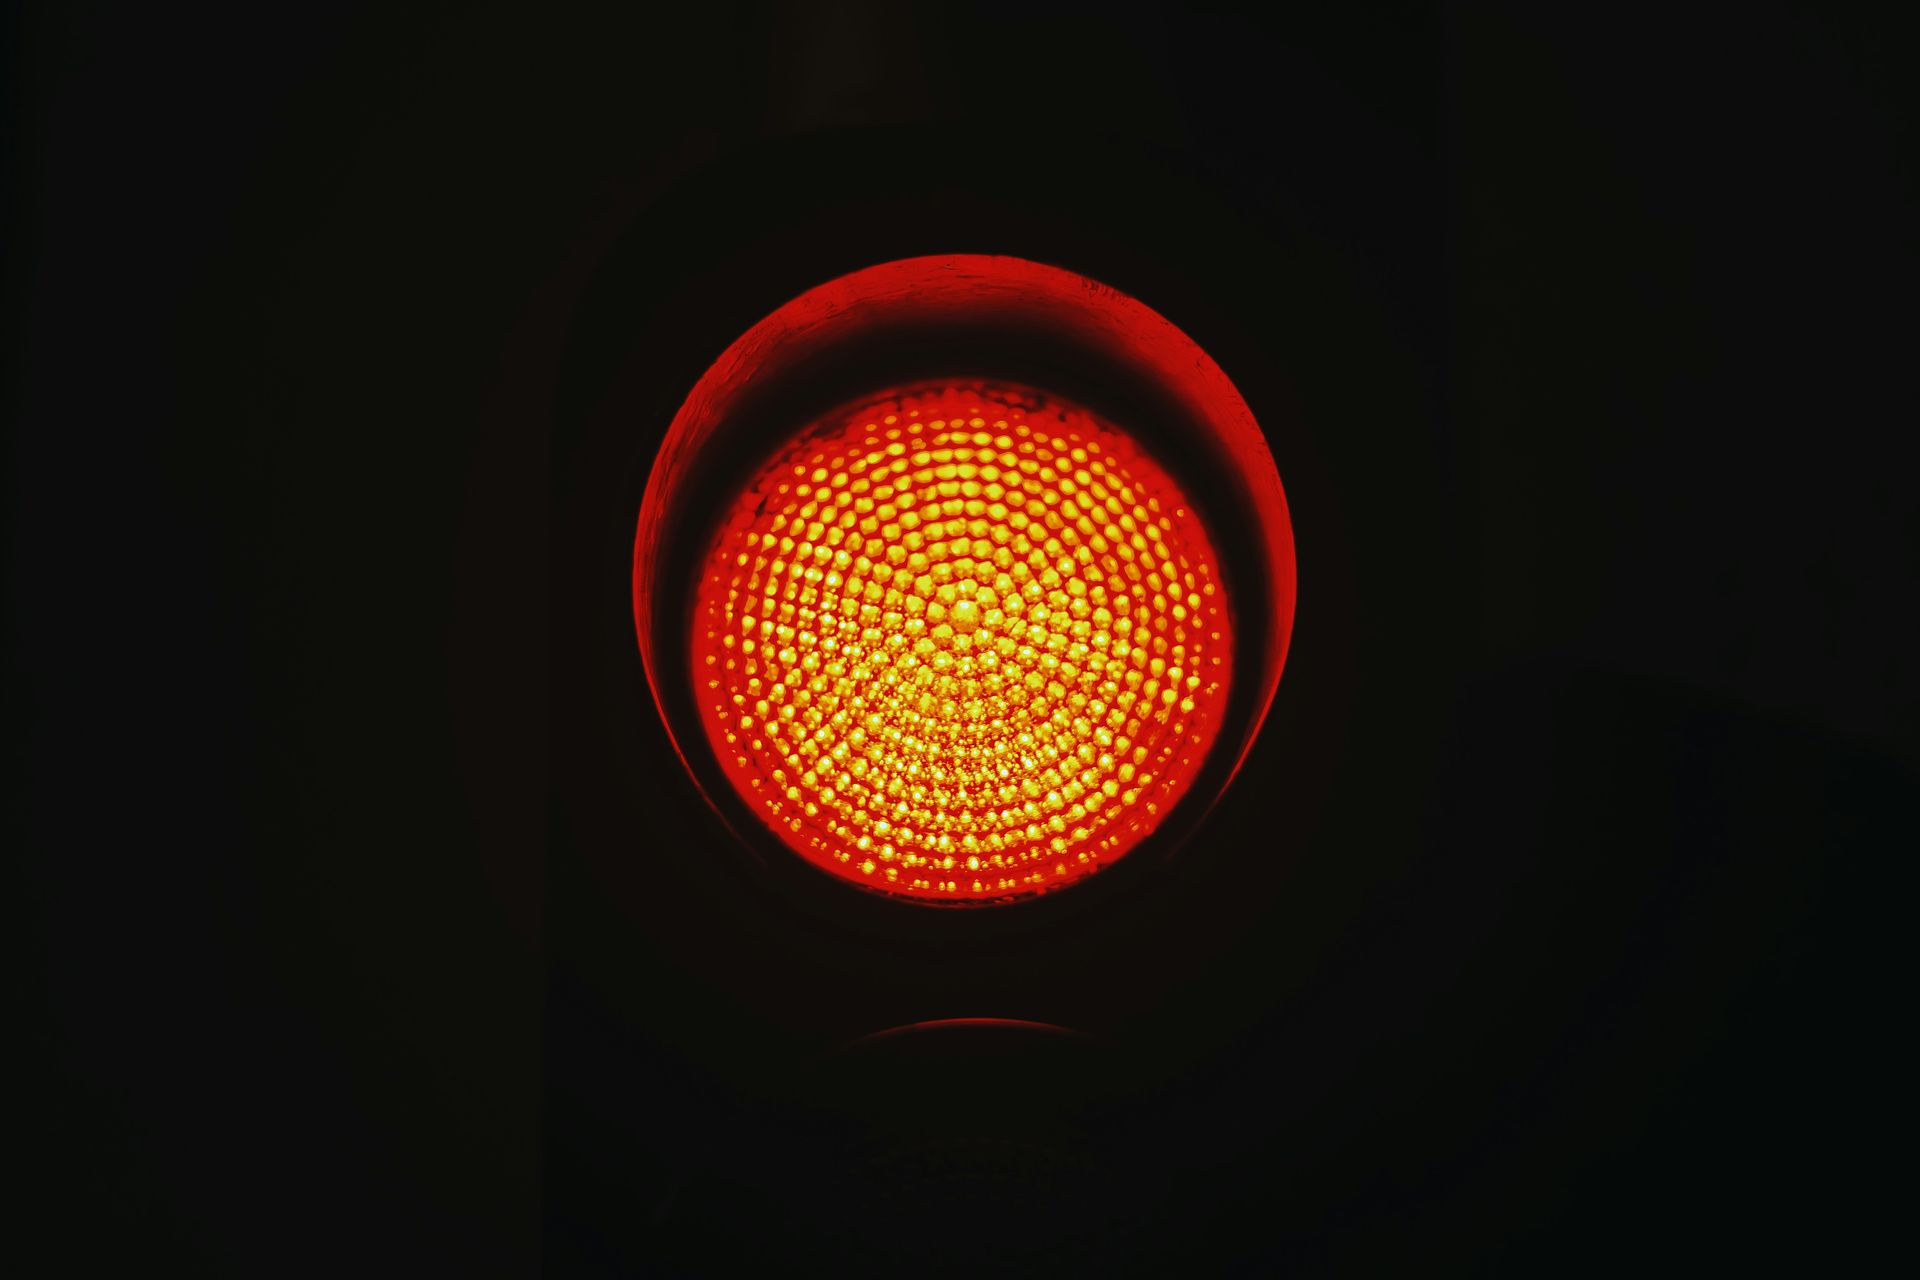 https://unsplash.com/photos/traffic-light-in-red-IqB5MPcQp6k